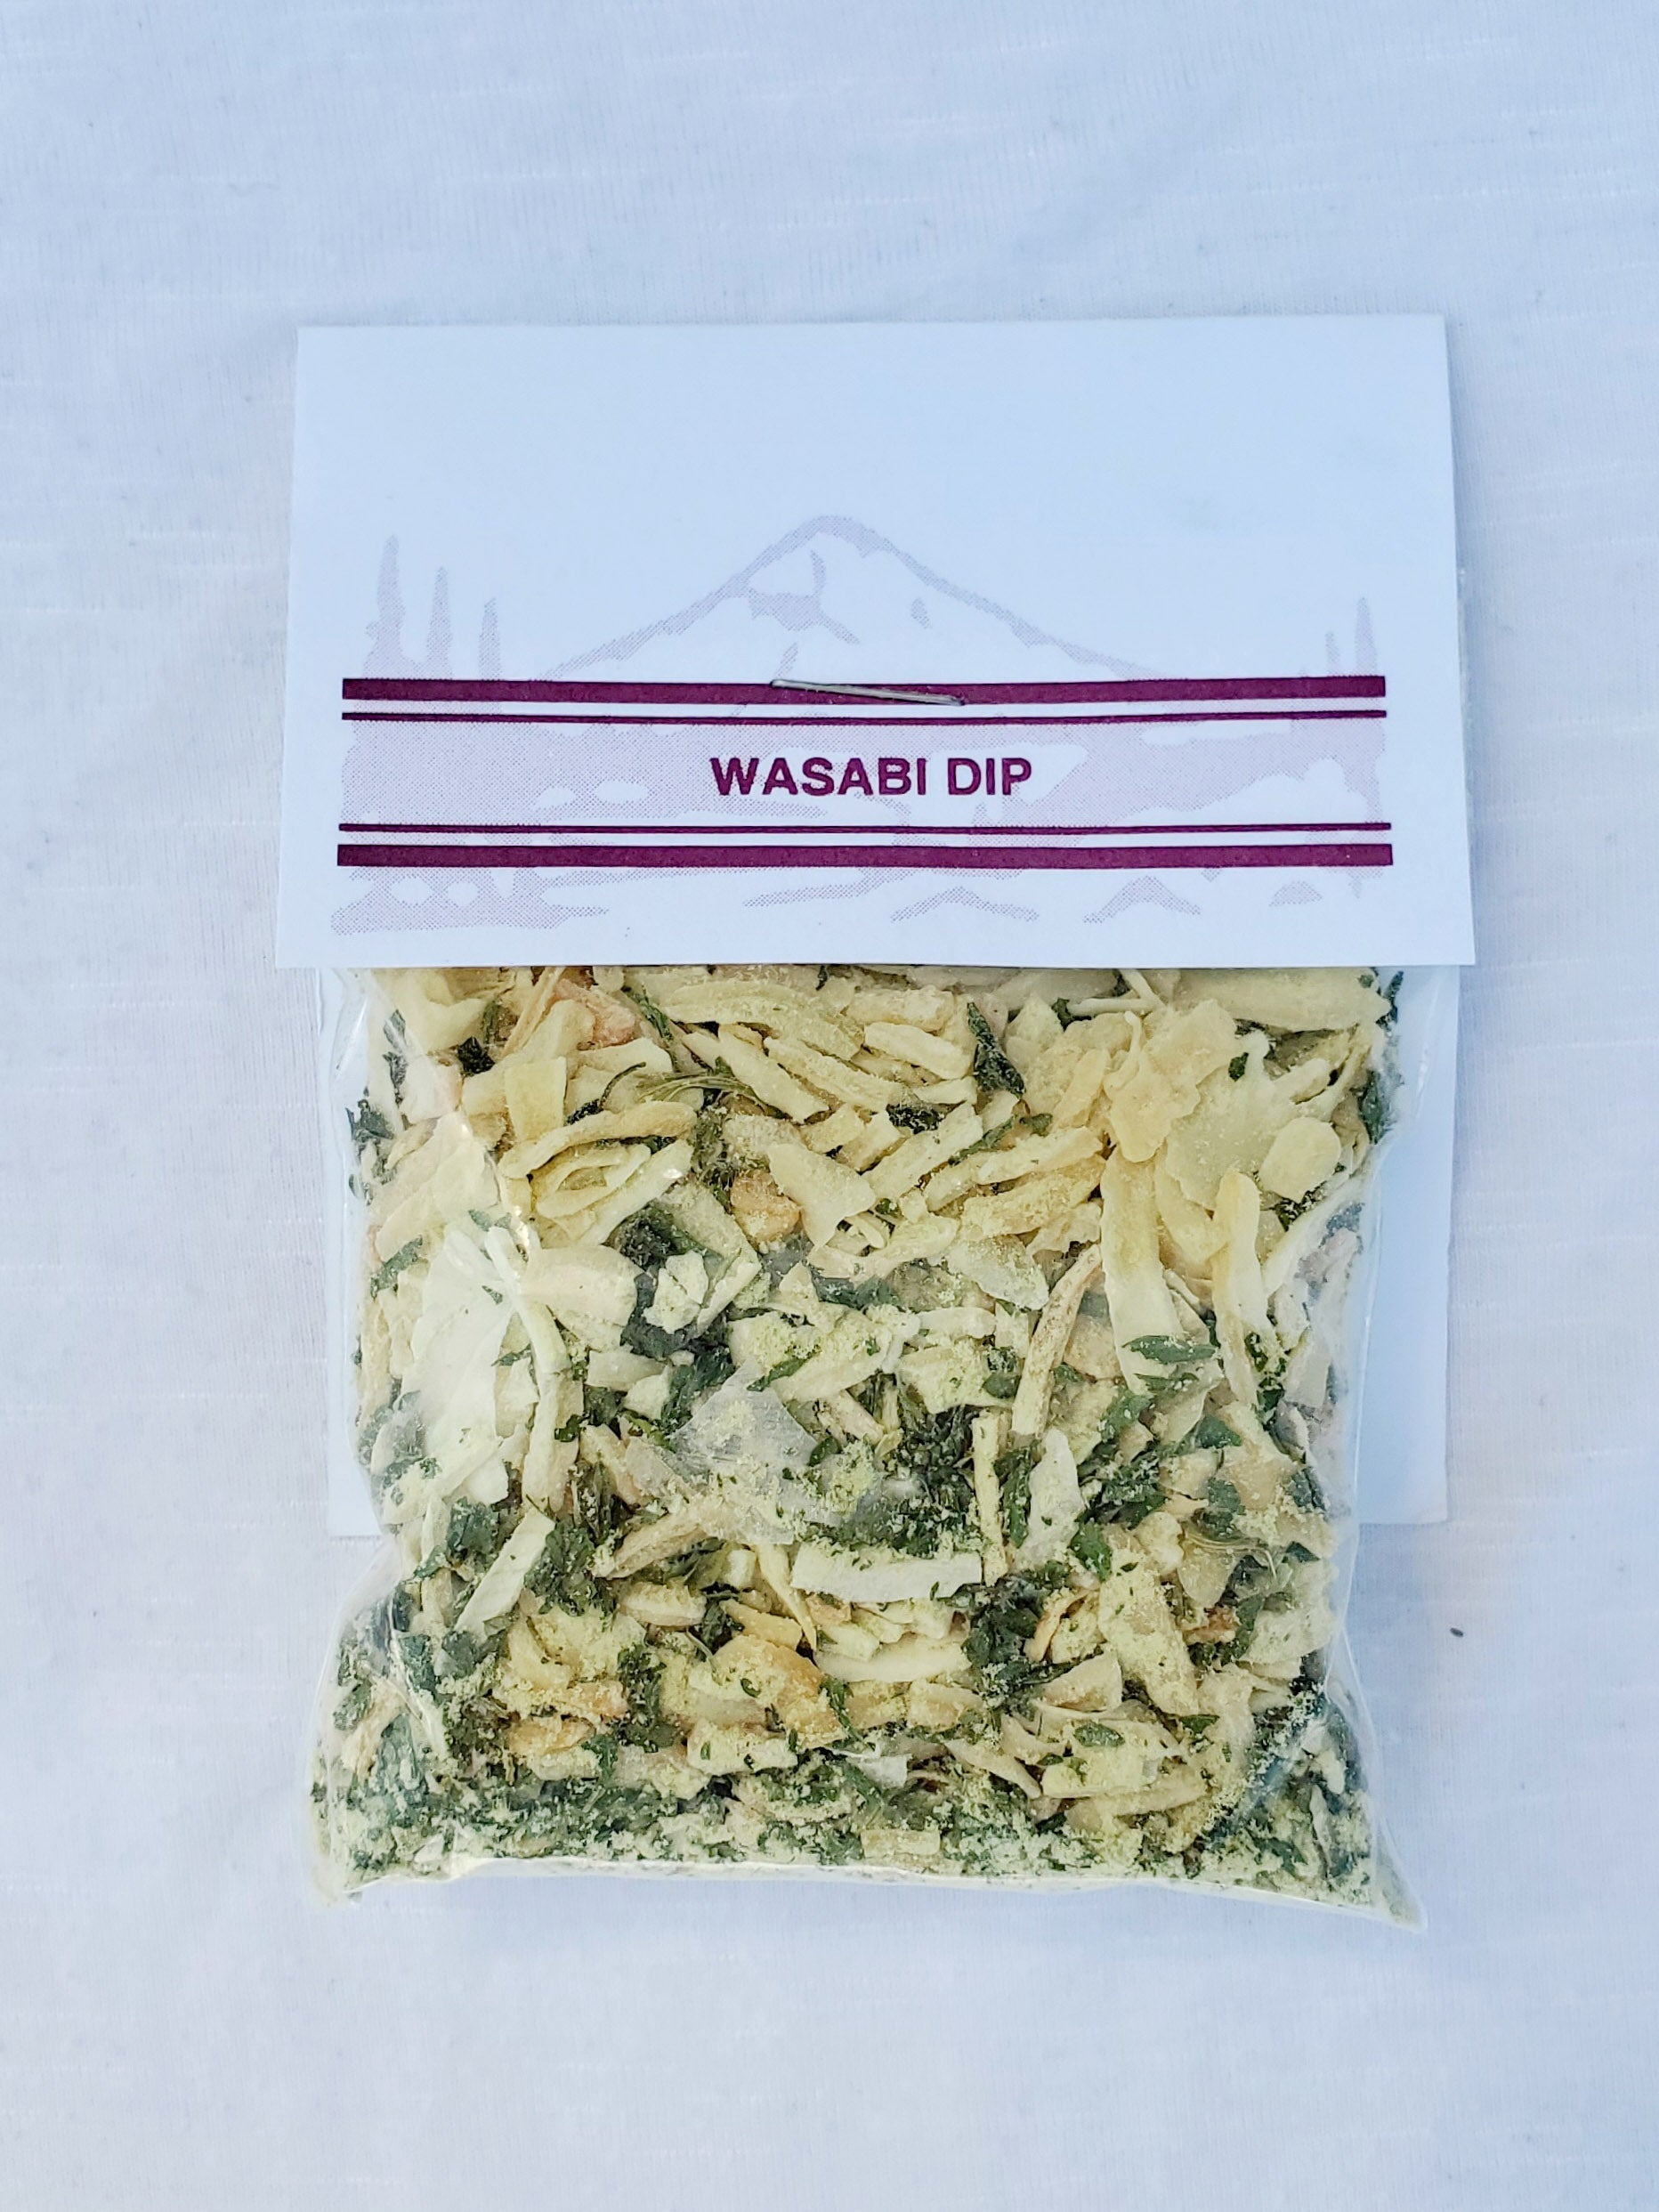 Northwest Spices - Wasabi Dip Seasoning Mix